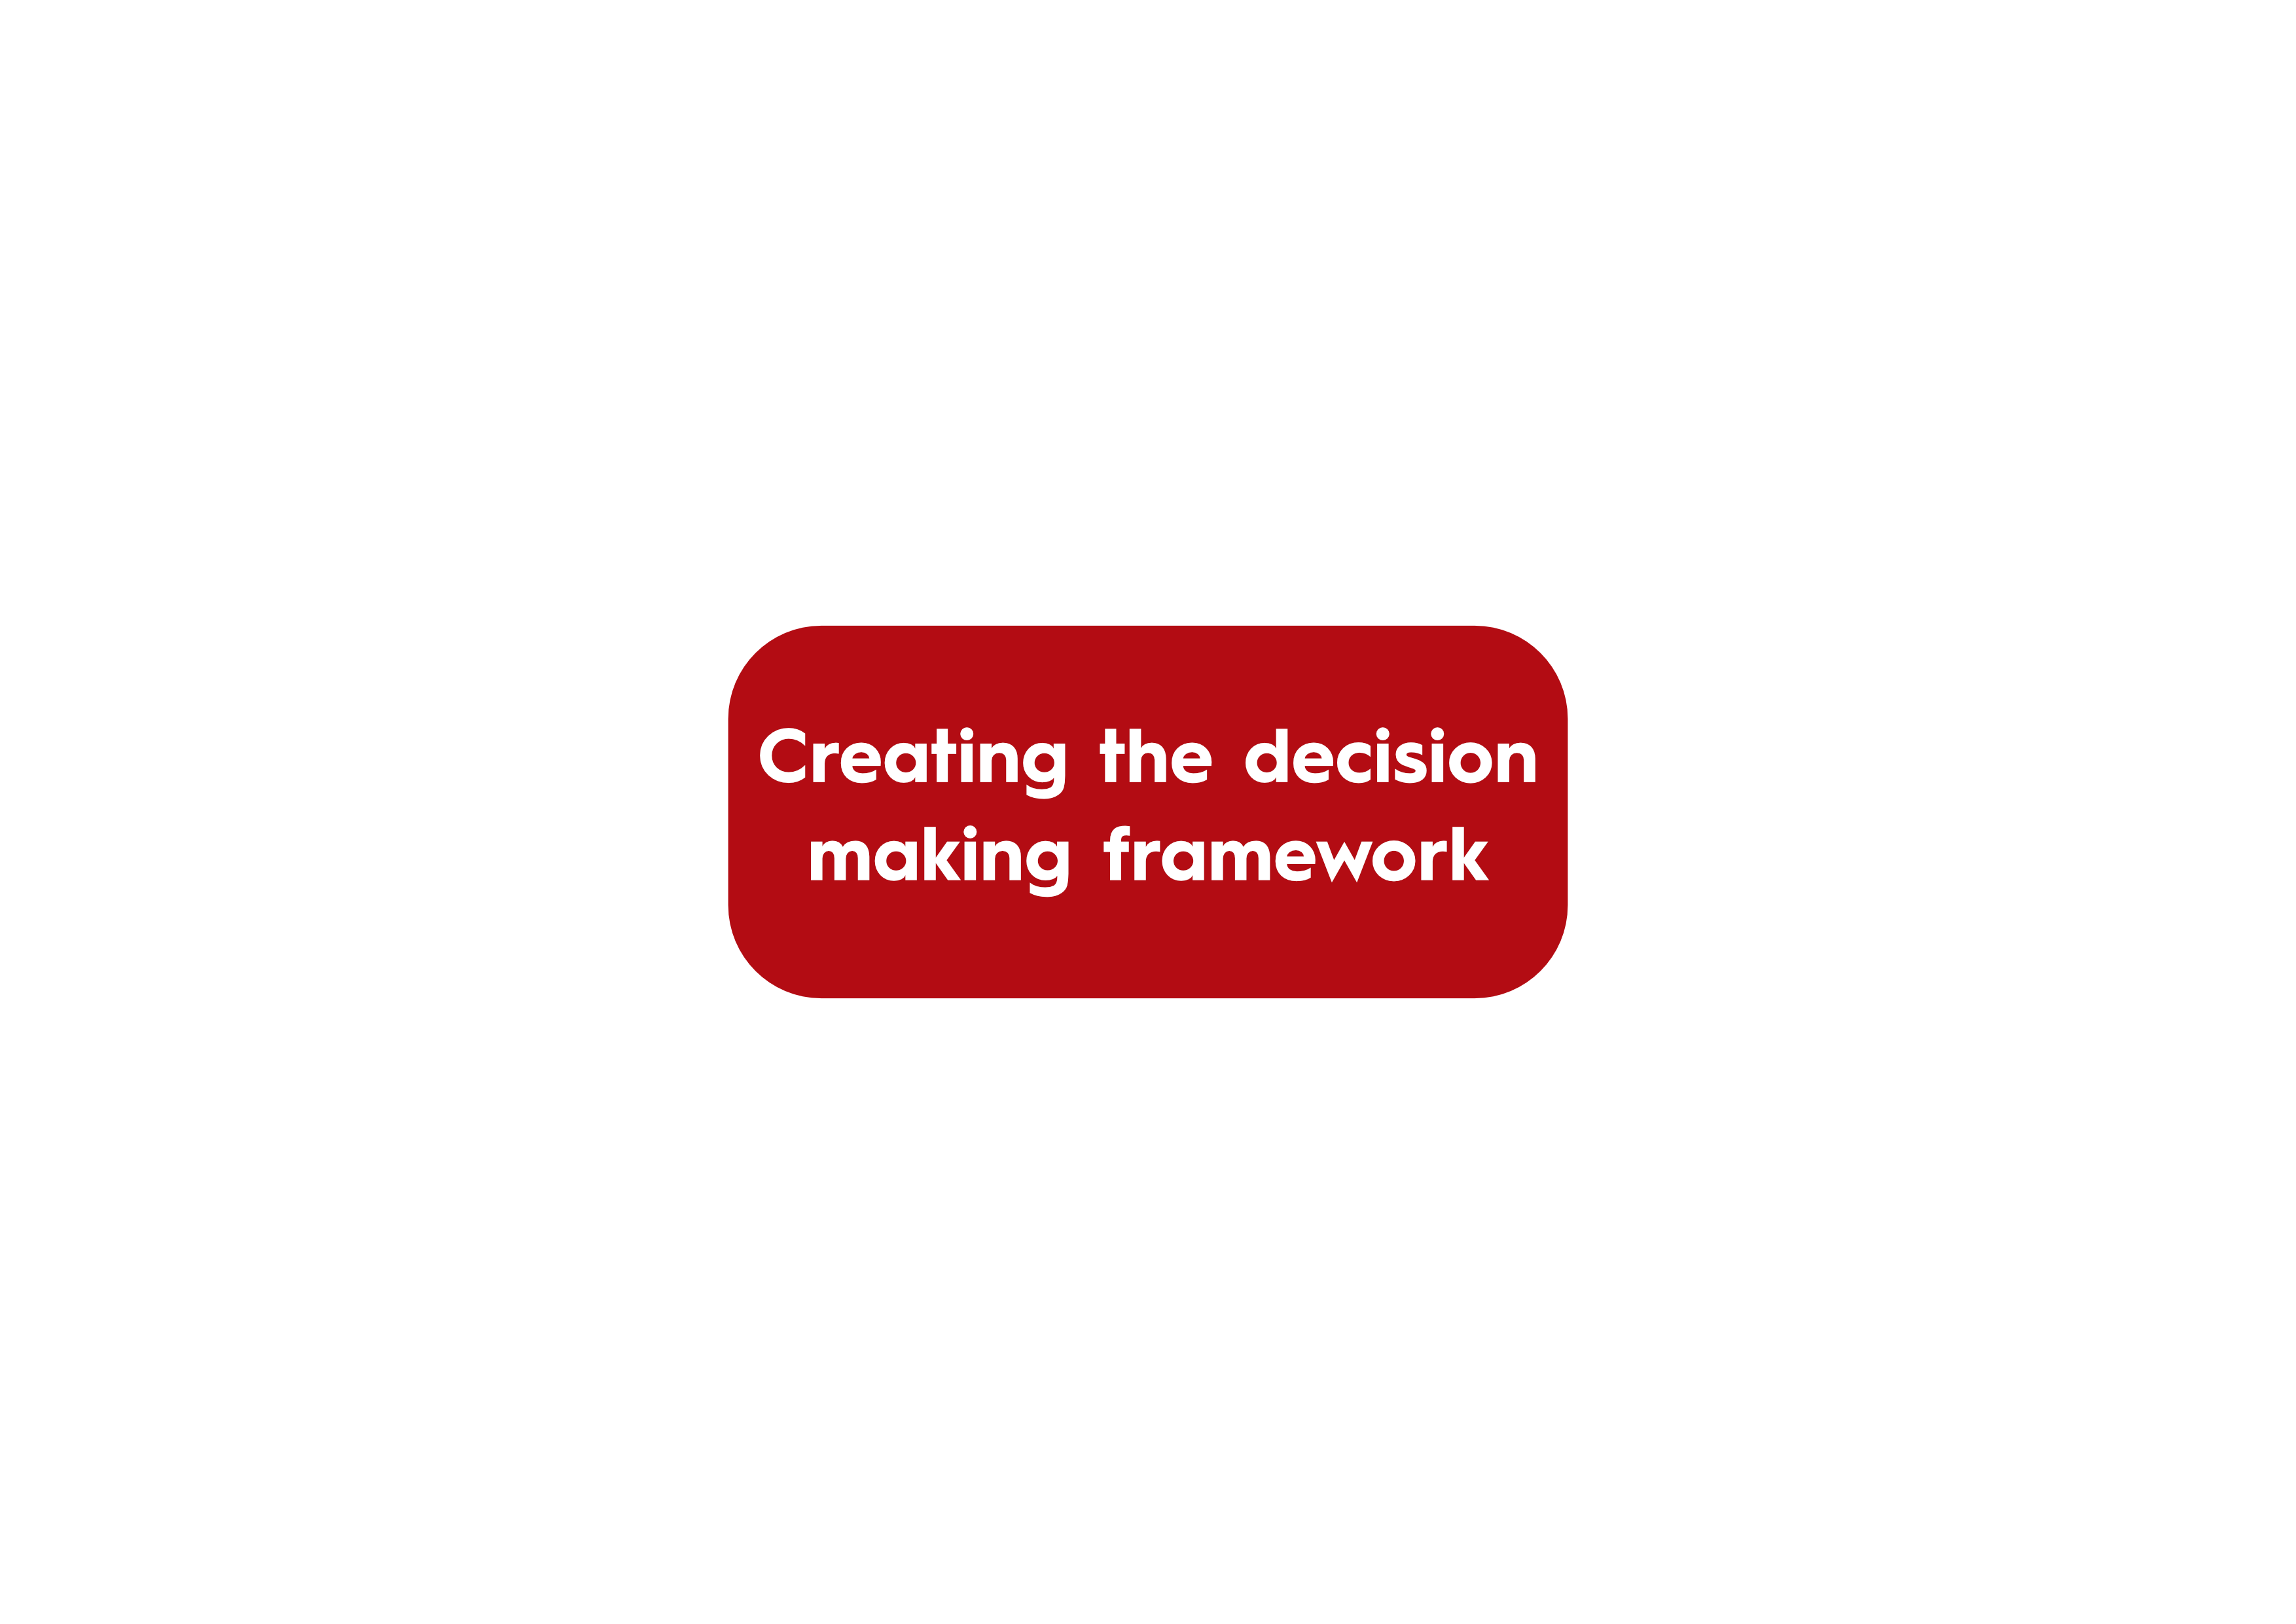 Creating the decision making framework